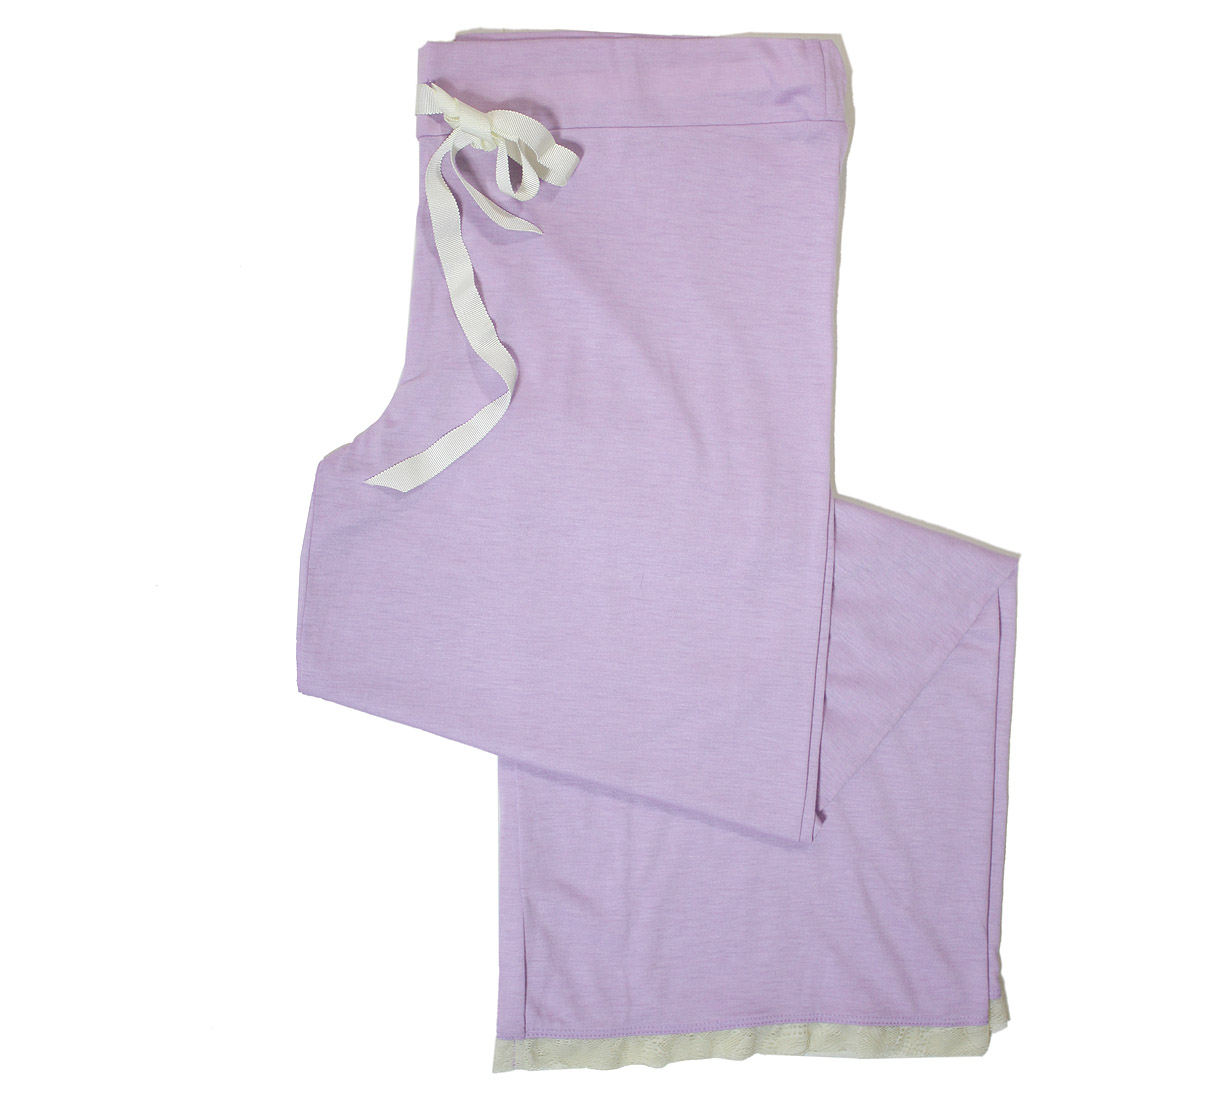 Venus in Play Pajama Lounge Pant in Lilac | Luxury Knit Nightwear | Between the Sheets Loungewear